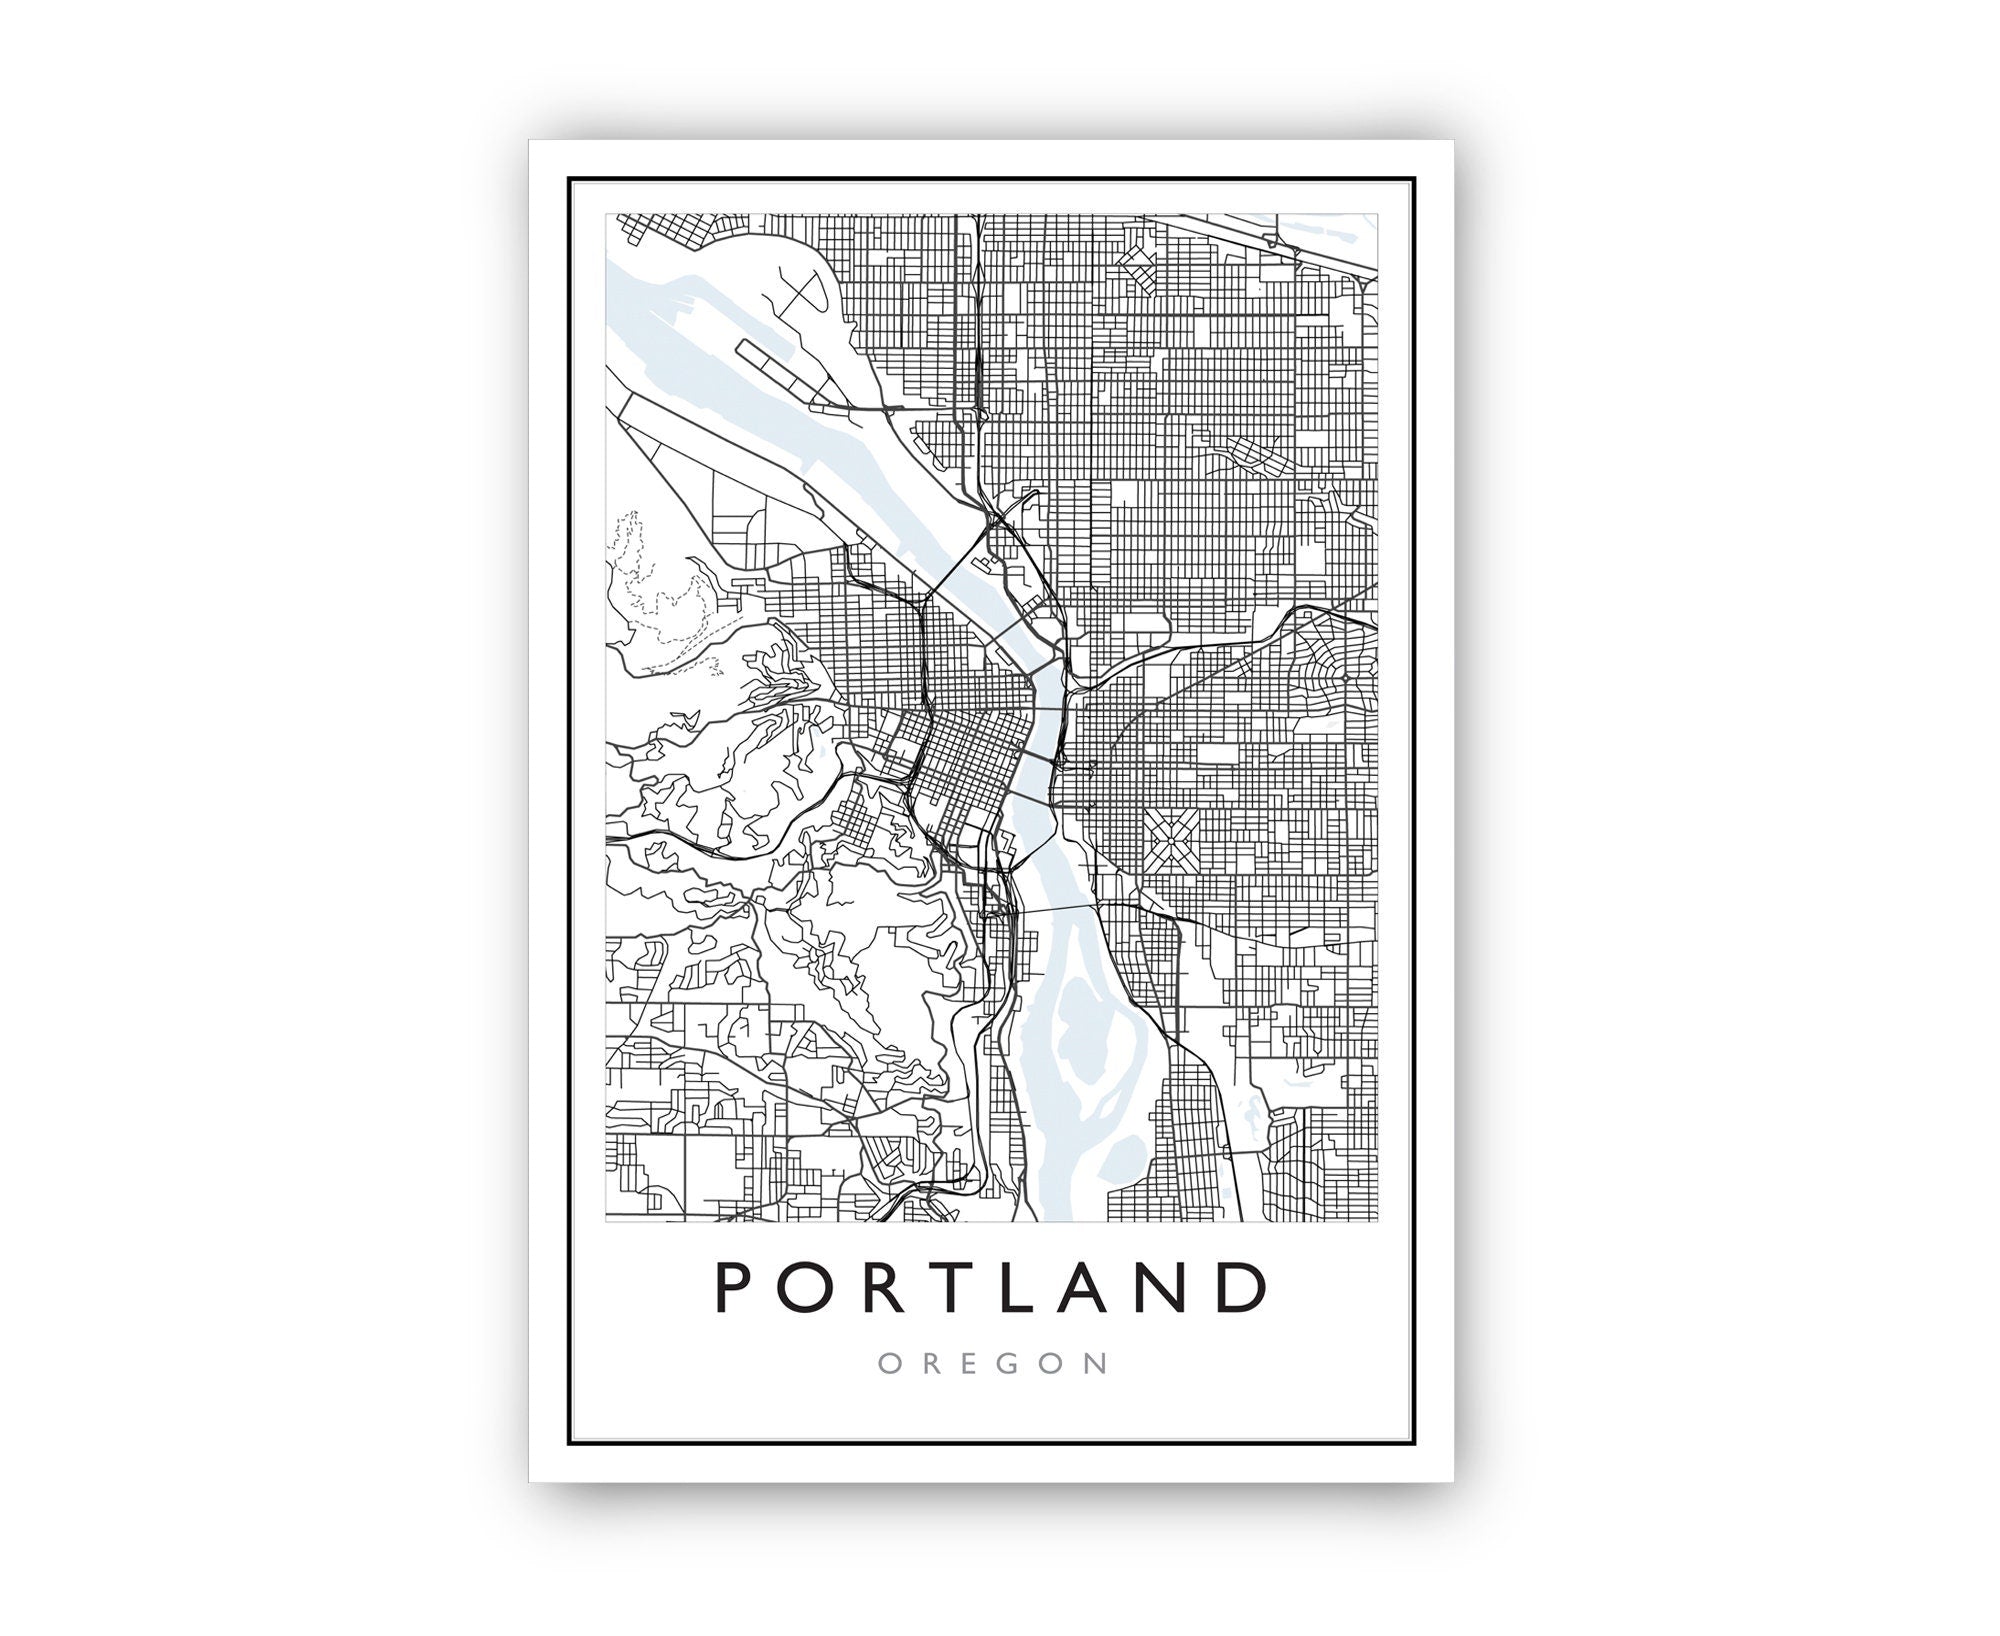 Portland Oregon City Map, Portland Oregon Road Map Poster, City Street Map Print, US City Modern City Map, Home Office Wall Art Decoration